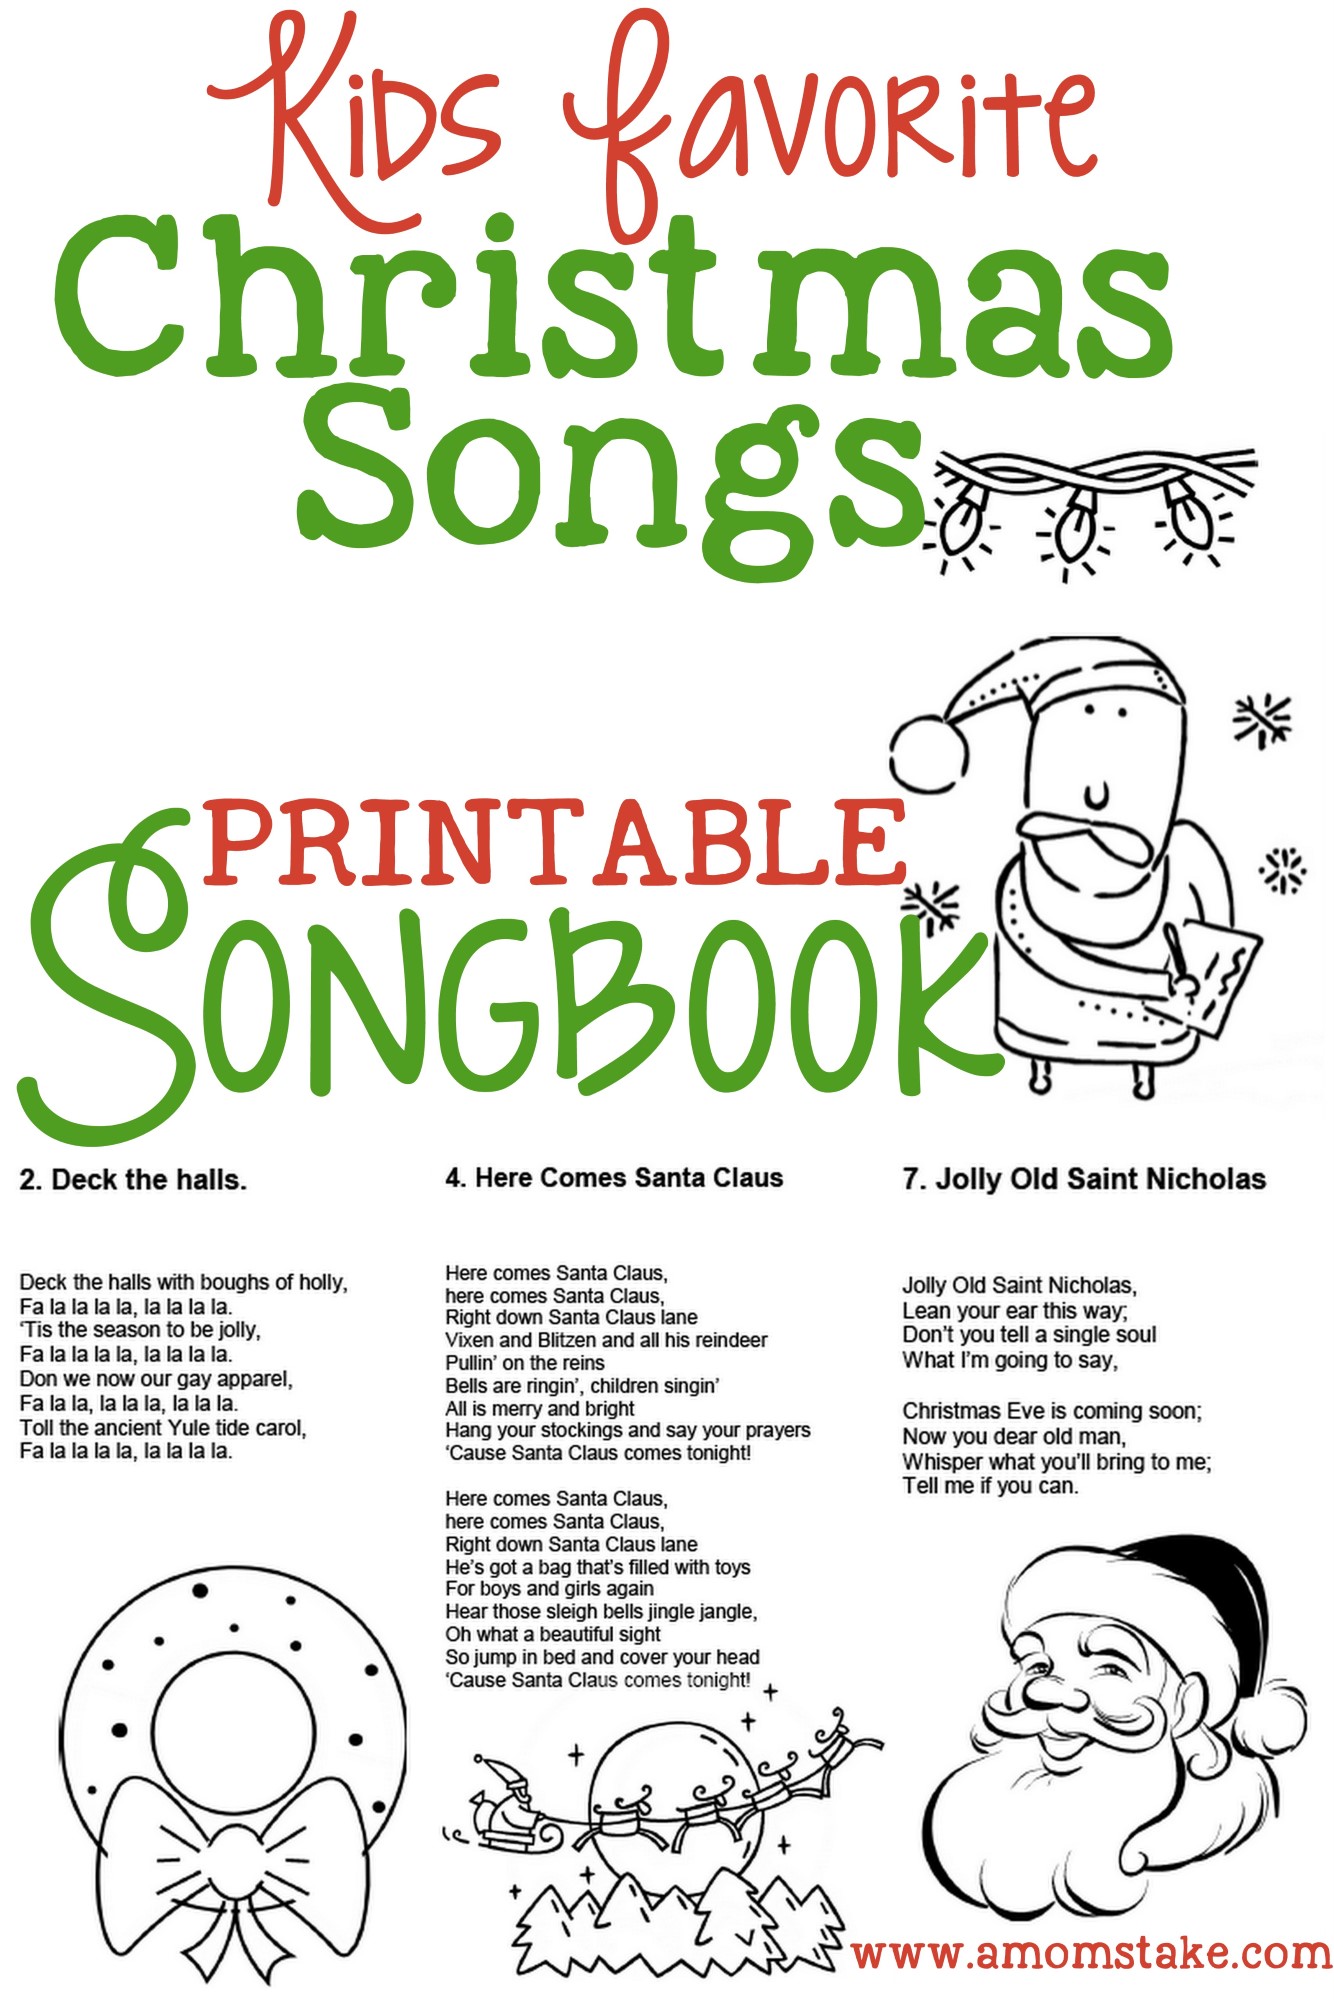 christmas-carol-lyrics-pdf-free-download-2023-best-top-most-popular